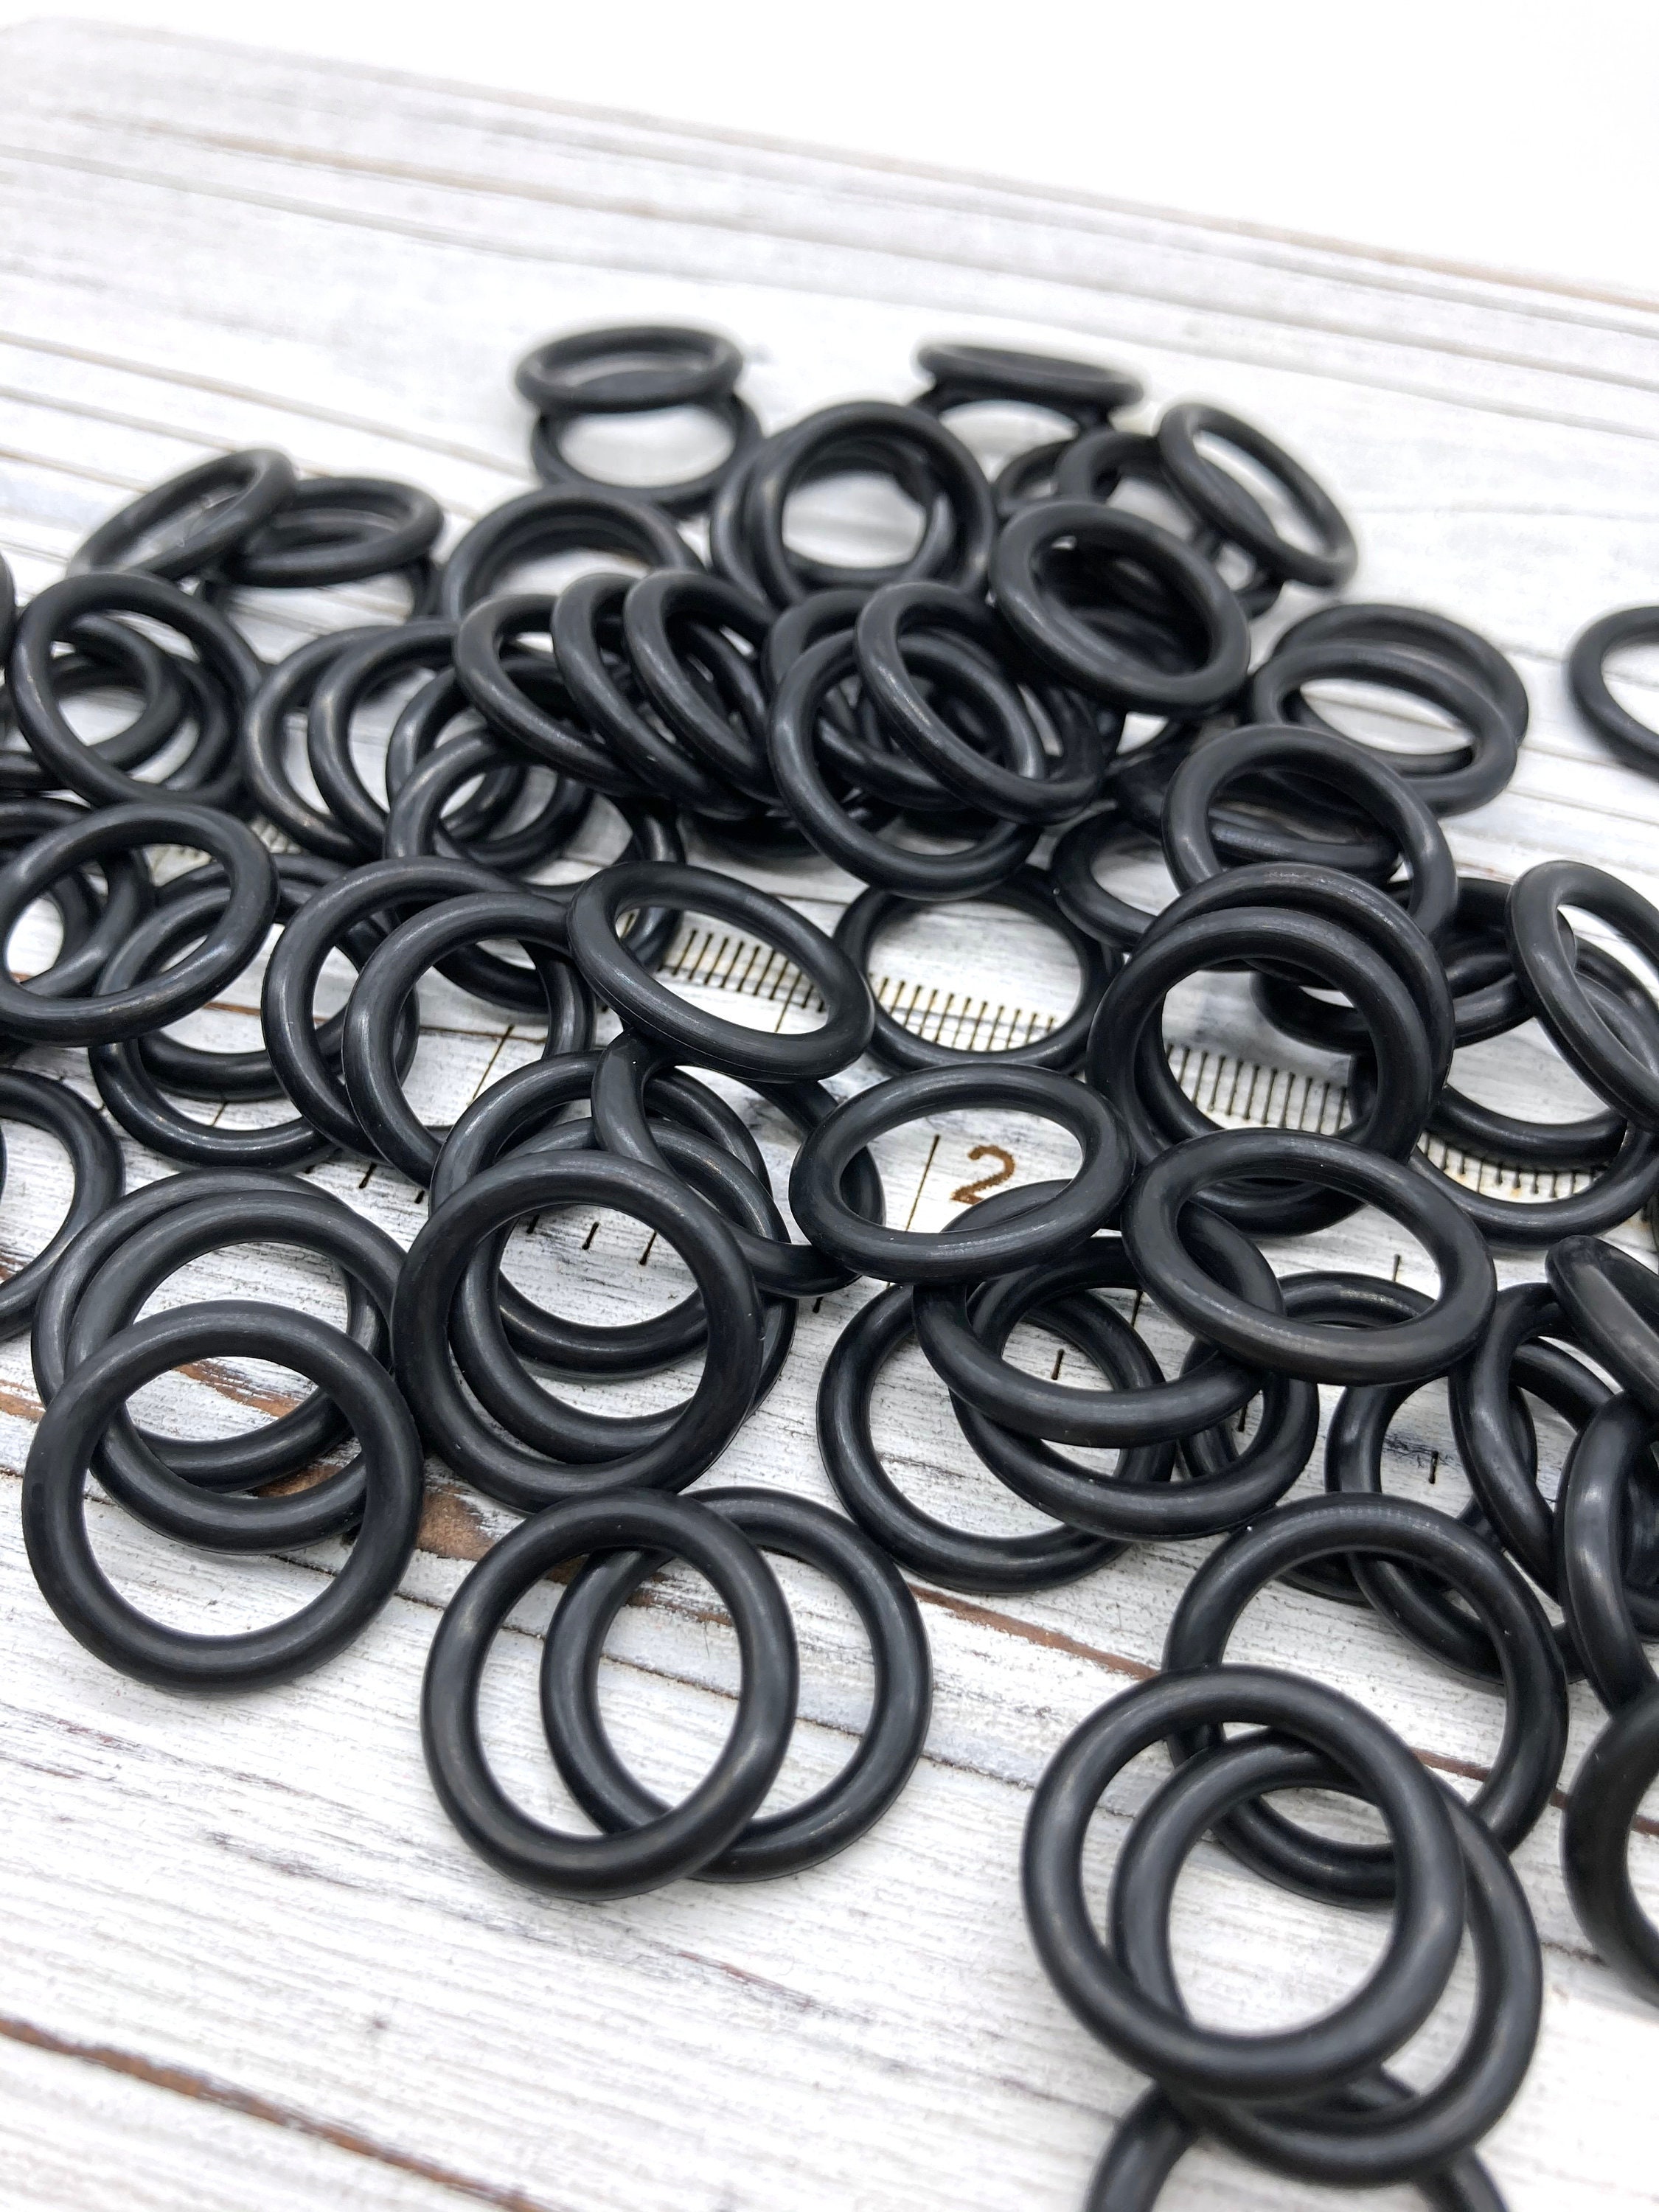 Swpeet 450pcs 1 25mm Gun-Black Key Chain Rings Kit, Including 150pcs Keychain Rings with Chain and 150pcs Jump Ring with 150pcs Screw Eye Pins Bulk